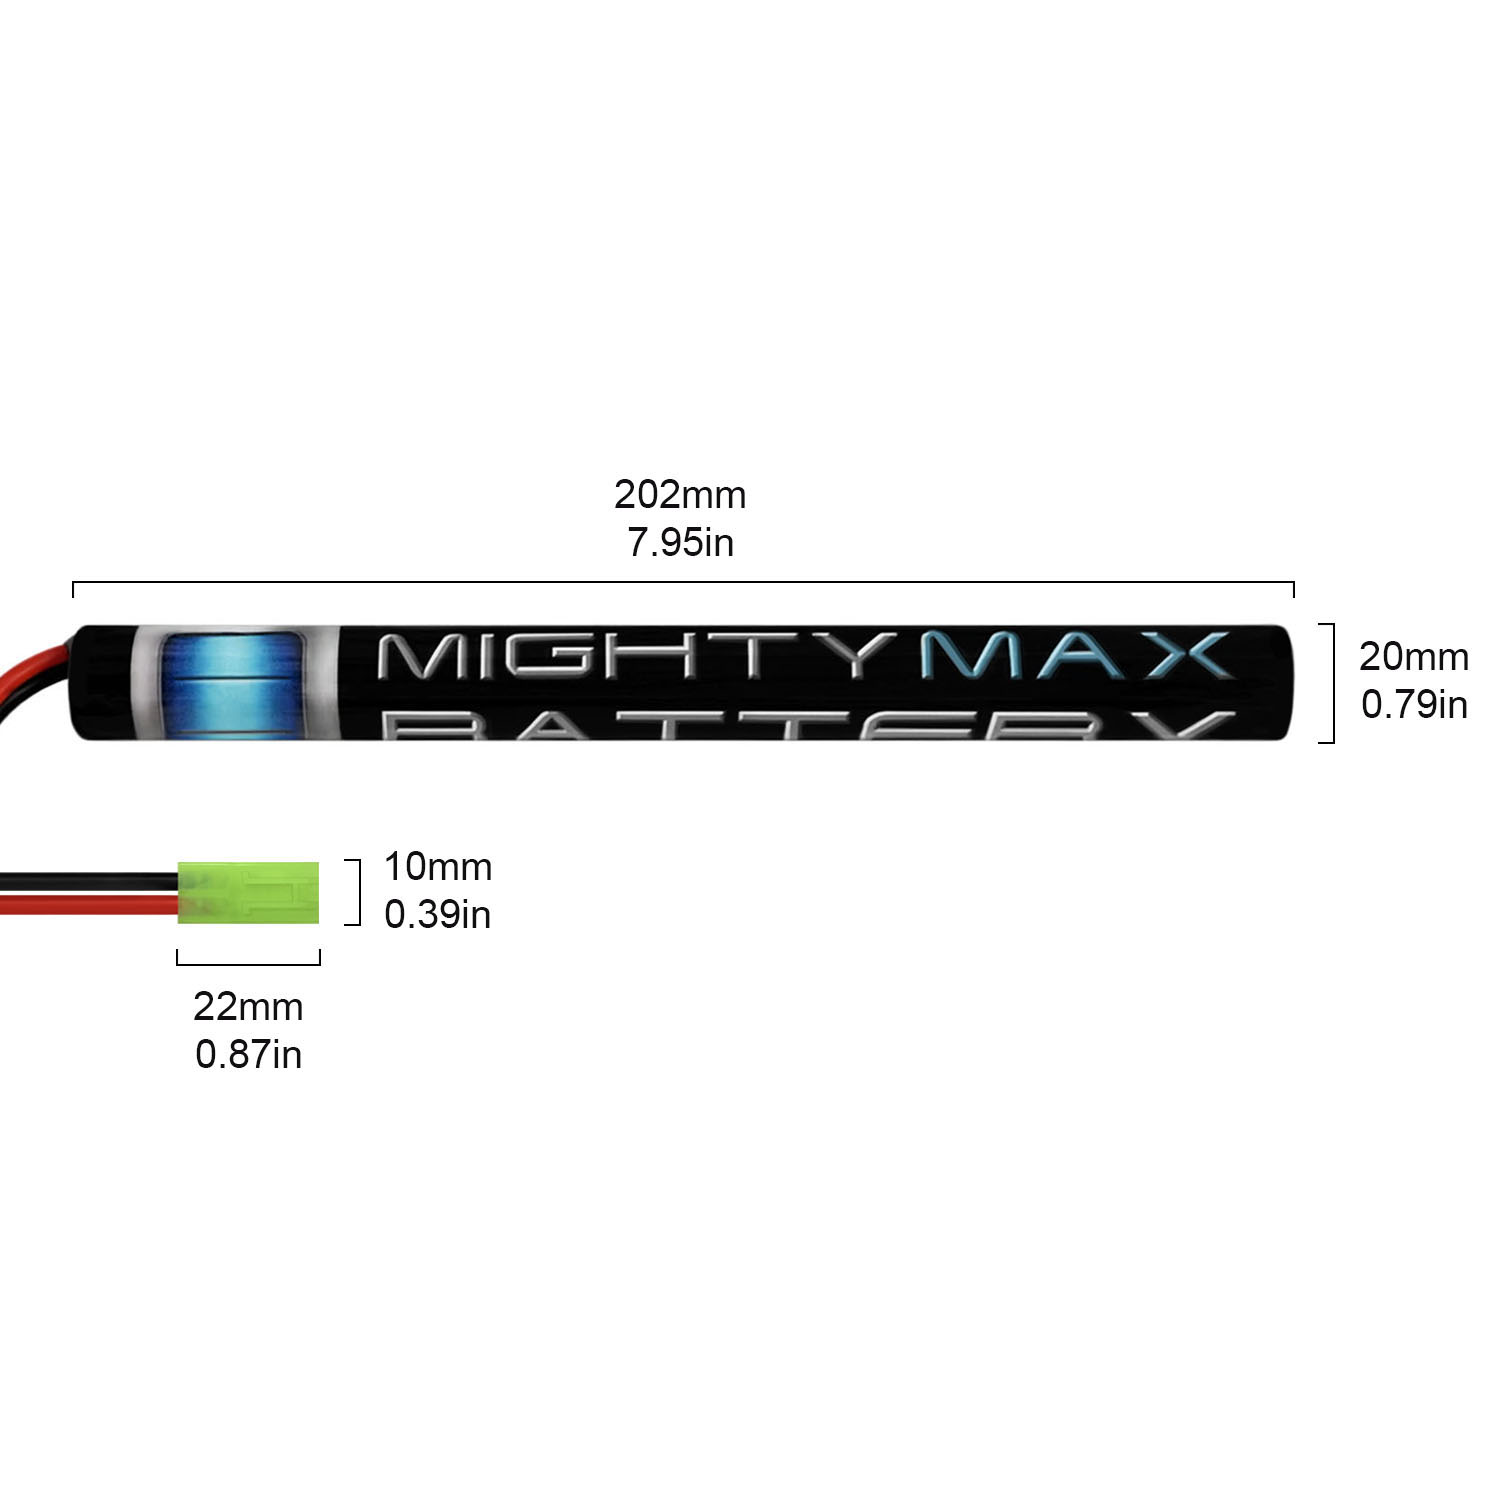 8.4V NiMH 1600mAh Stick Pack Mini Battery + 8.4V-9.6V NiMH Smart Charger